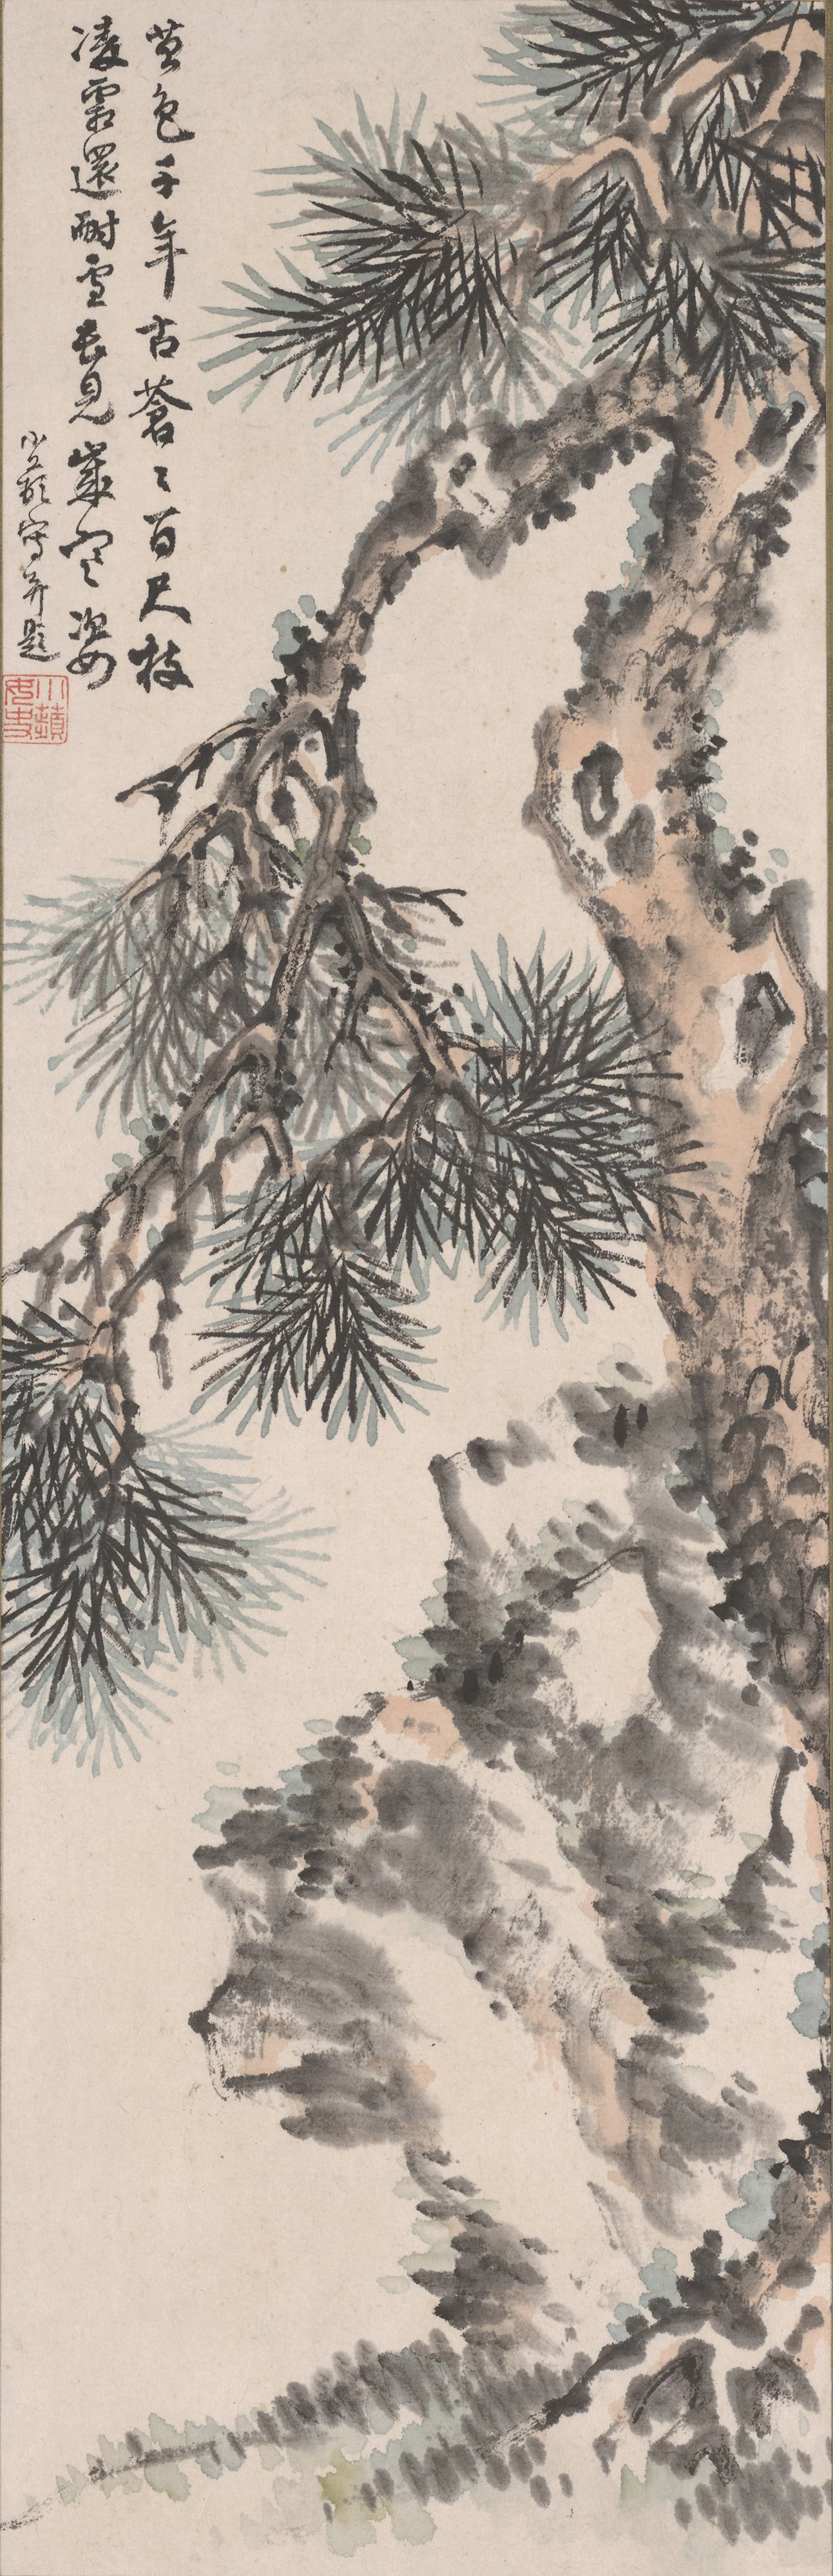 Pine, Rock, and Poem, Noguchi Shōhin